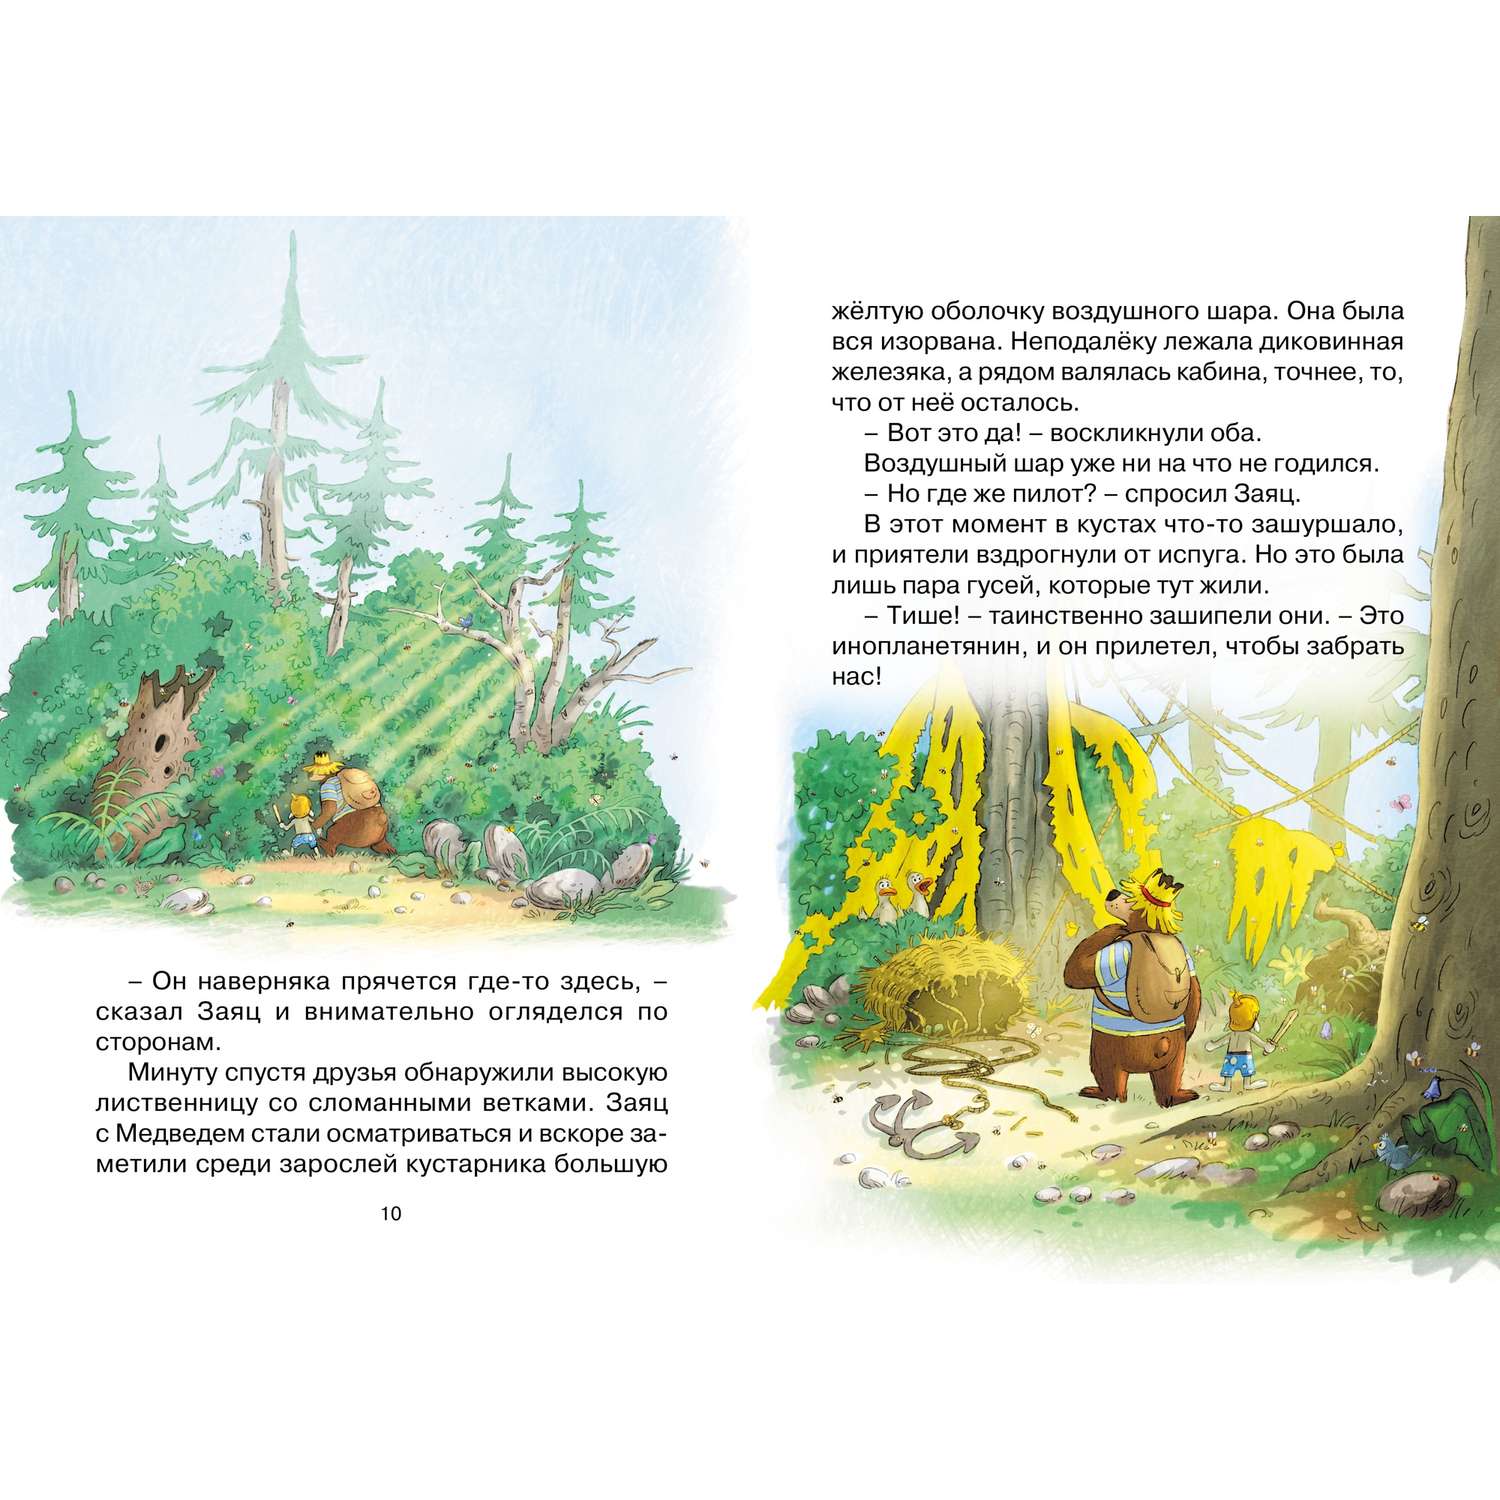 Книга МАХАОН Аварийная посадка Валько Серия: Сказки волшебного леса - фото 12